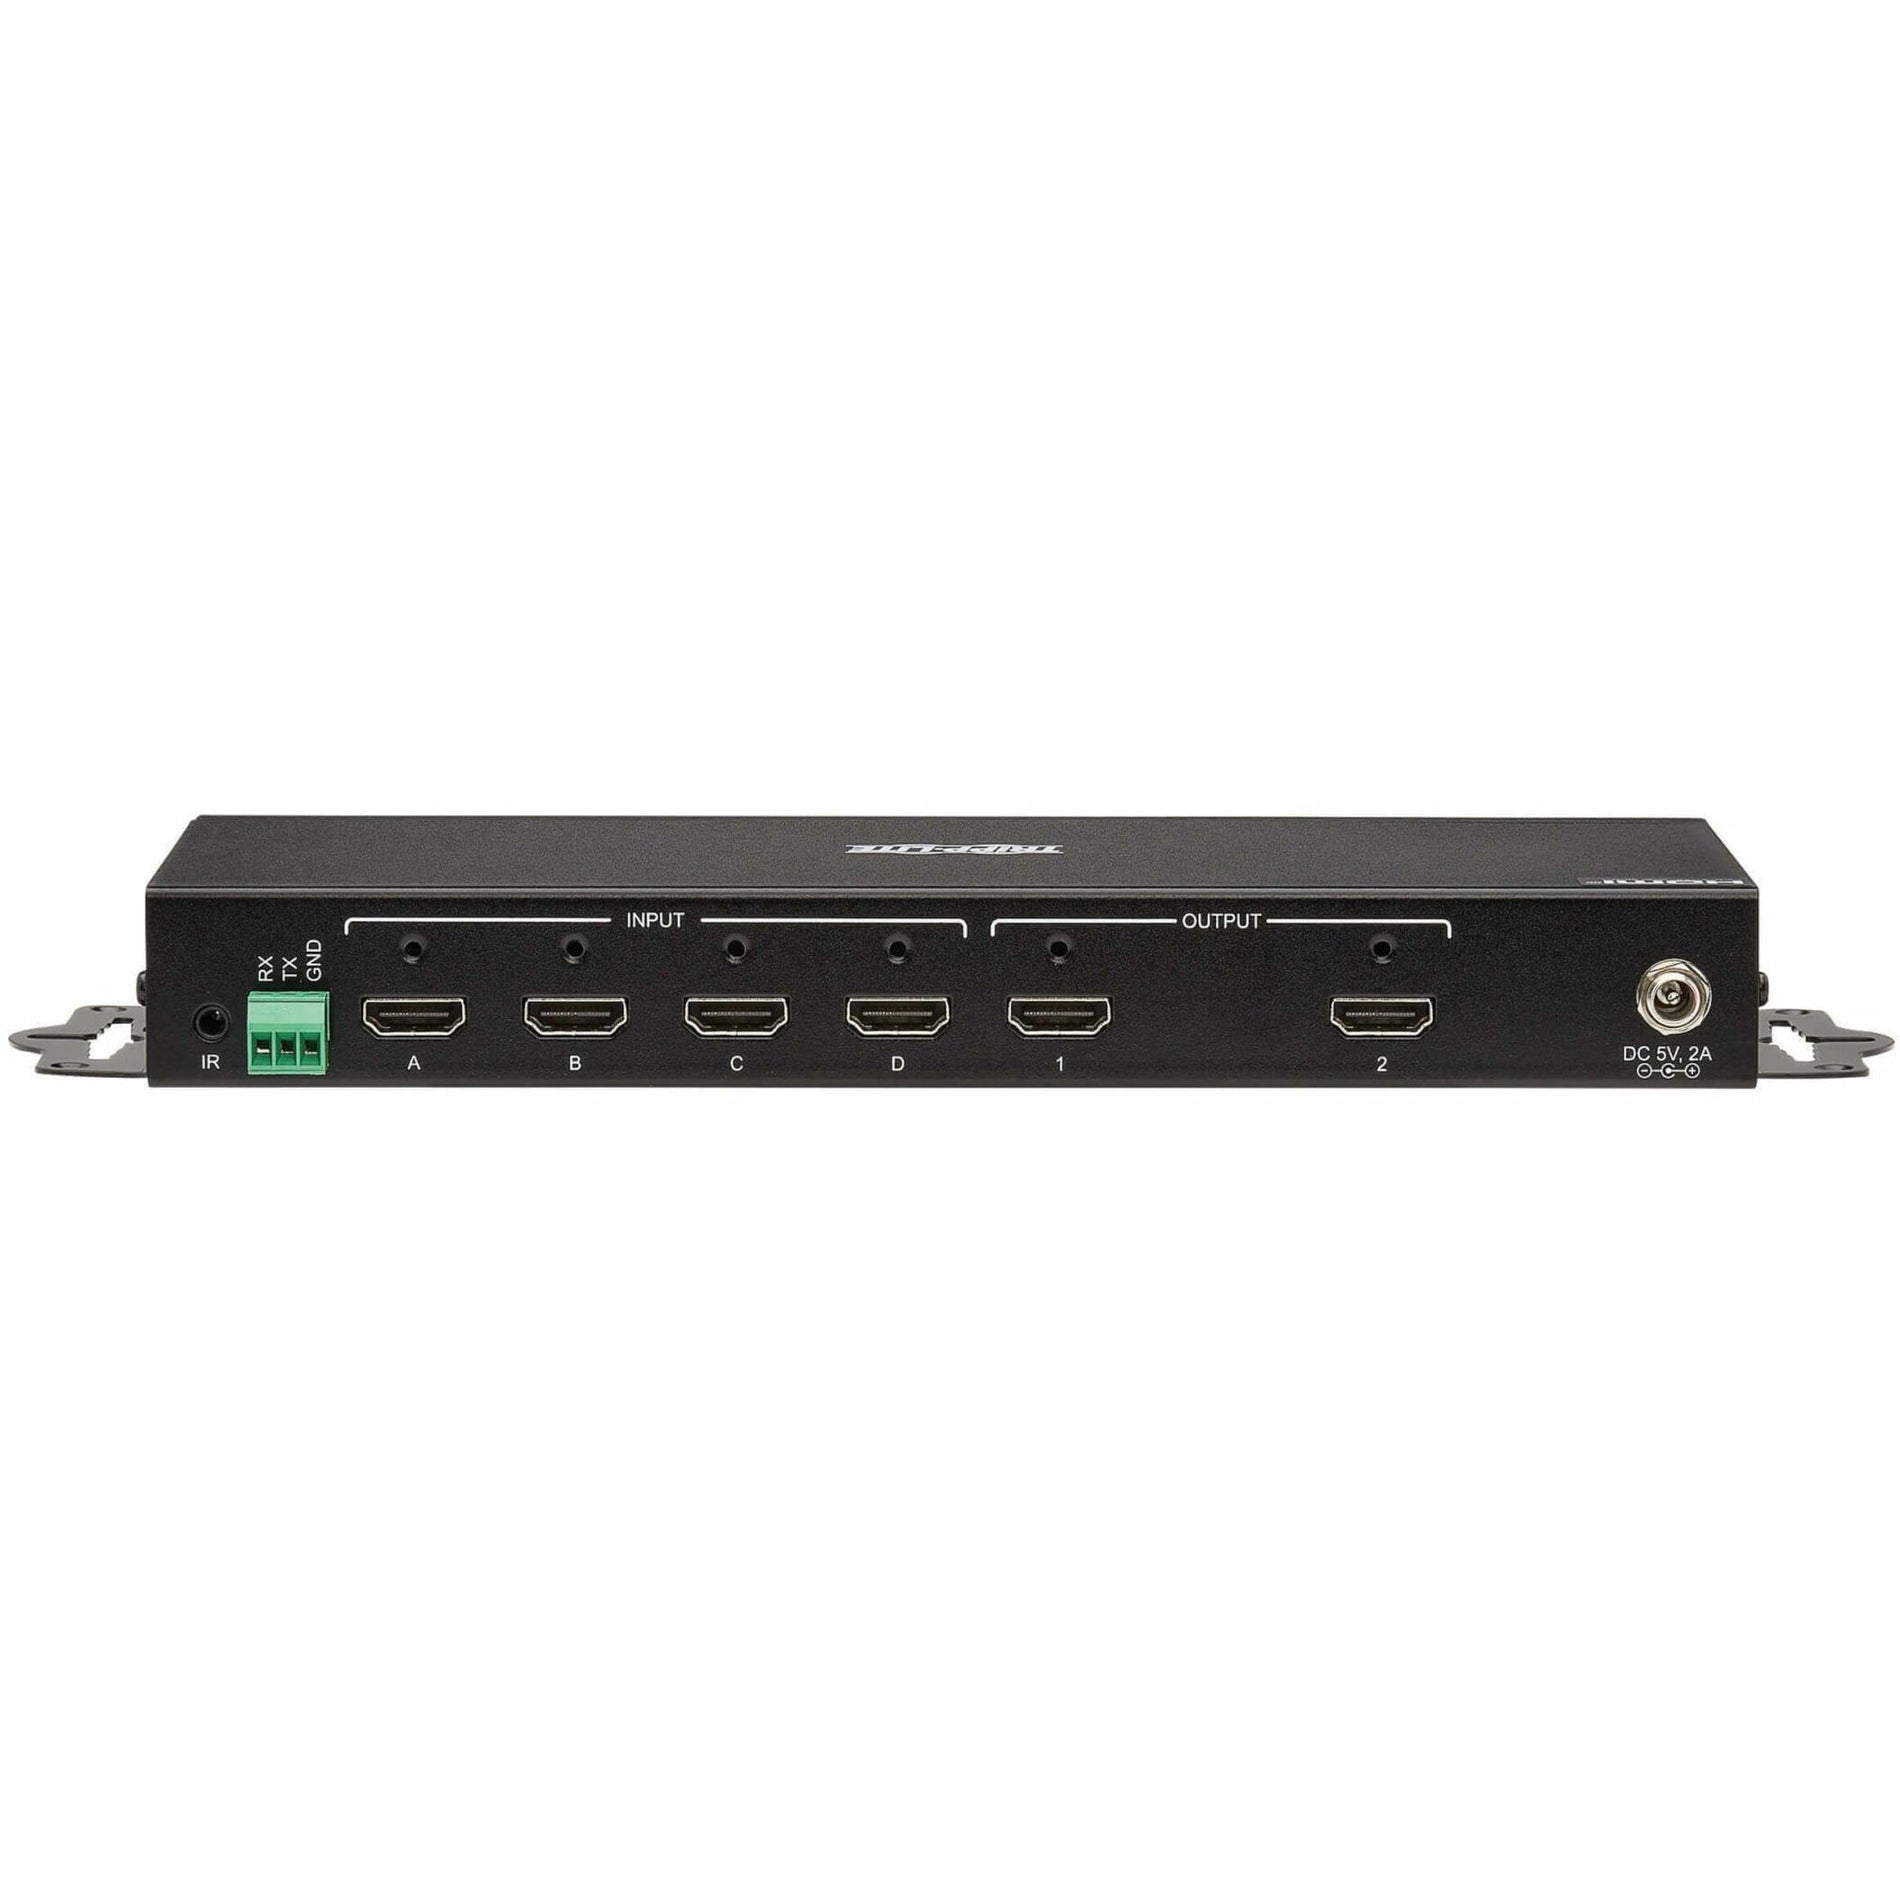 Tripp Lite B119-4X2-4K 4x2 HDMI Matrix Switch/Splitter 4K Video Switchbox